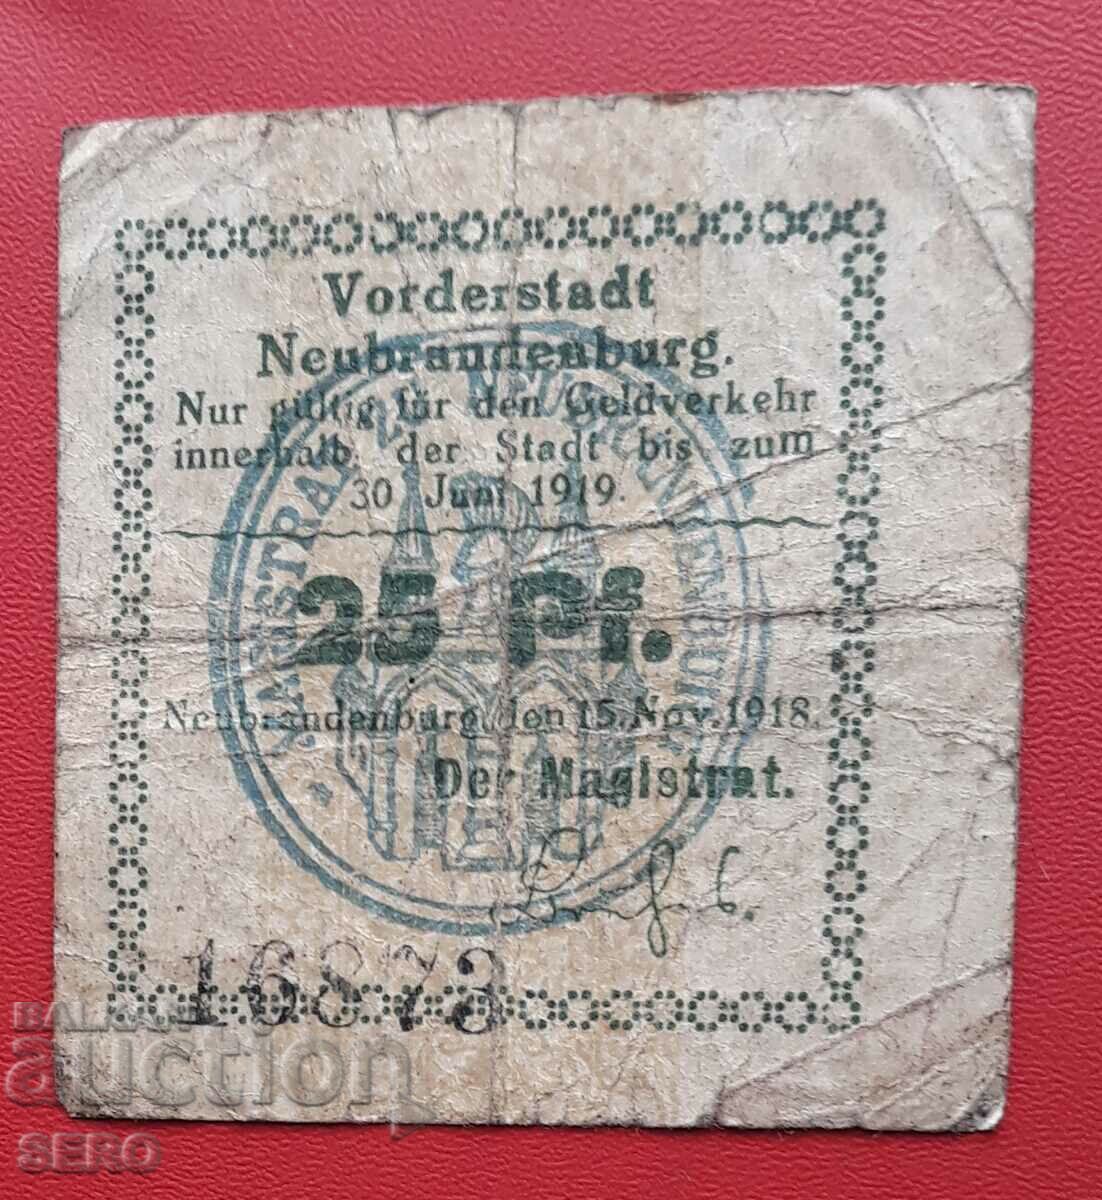 Банкнота-Германия-Мекленбург-Померания-Нойбранденбург-25 пф.